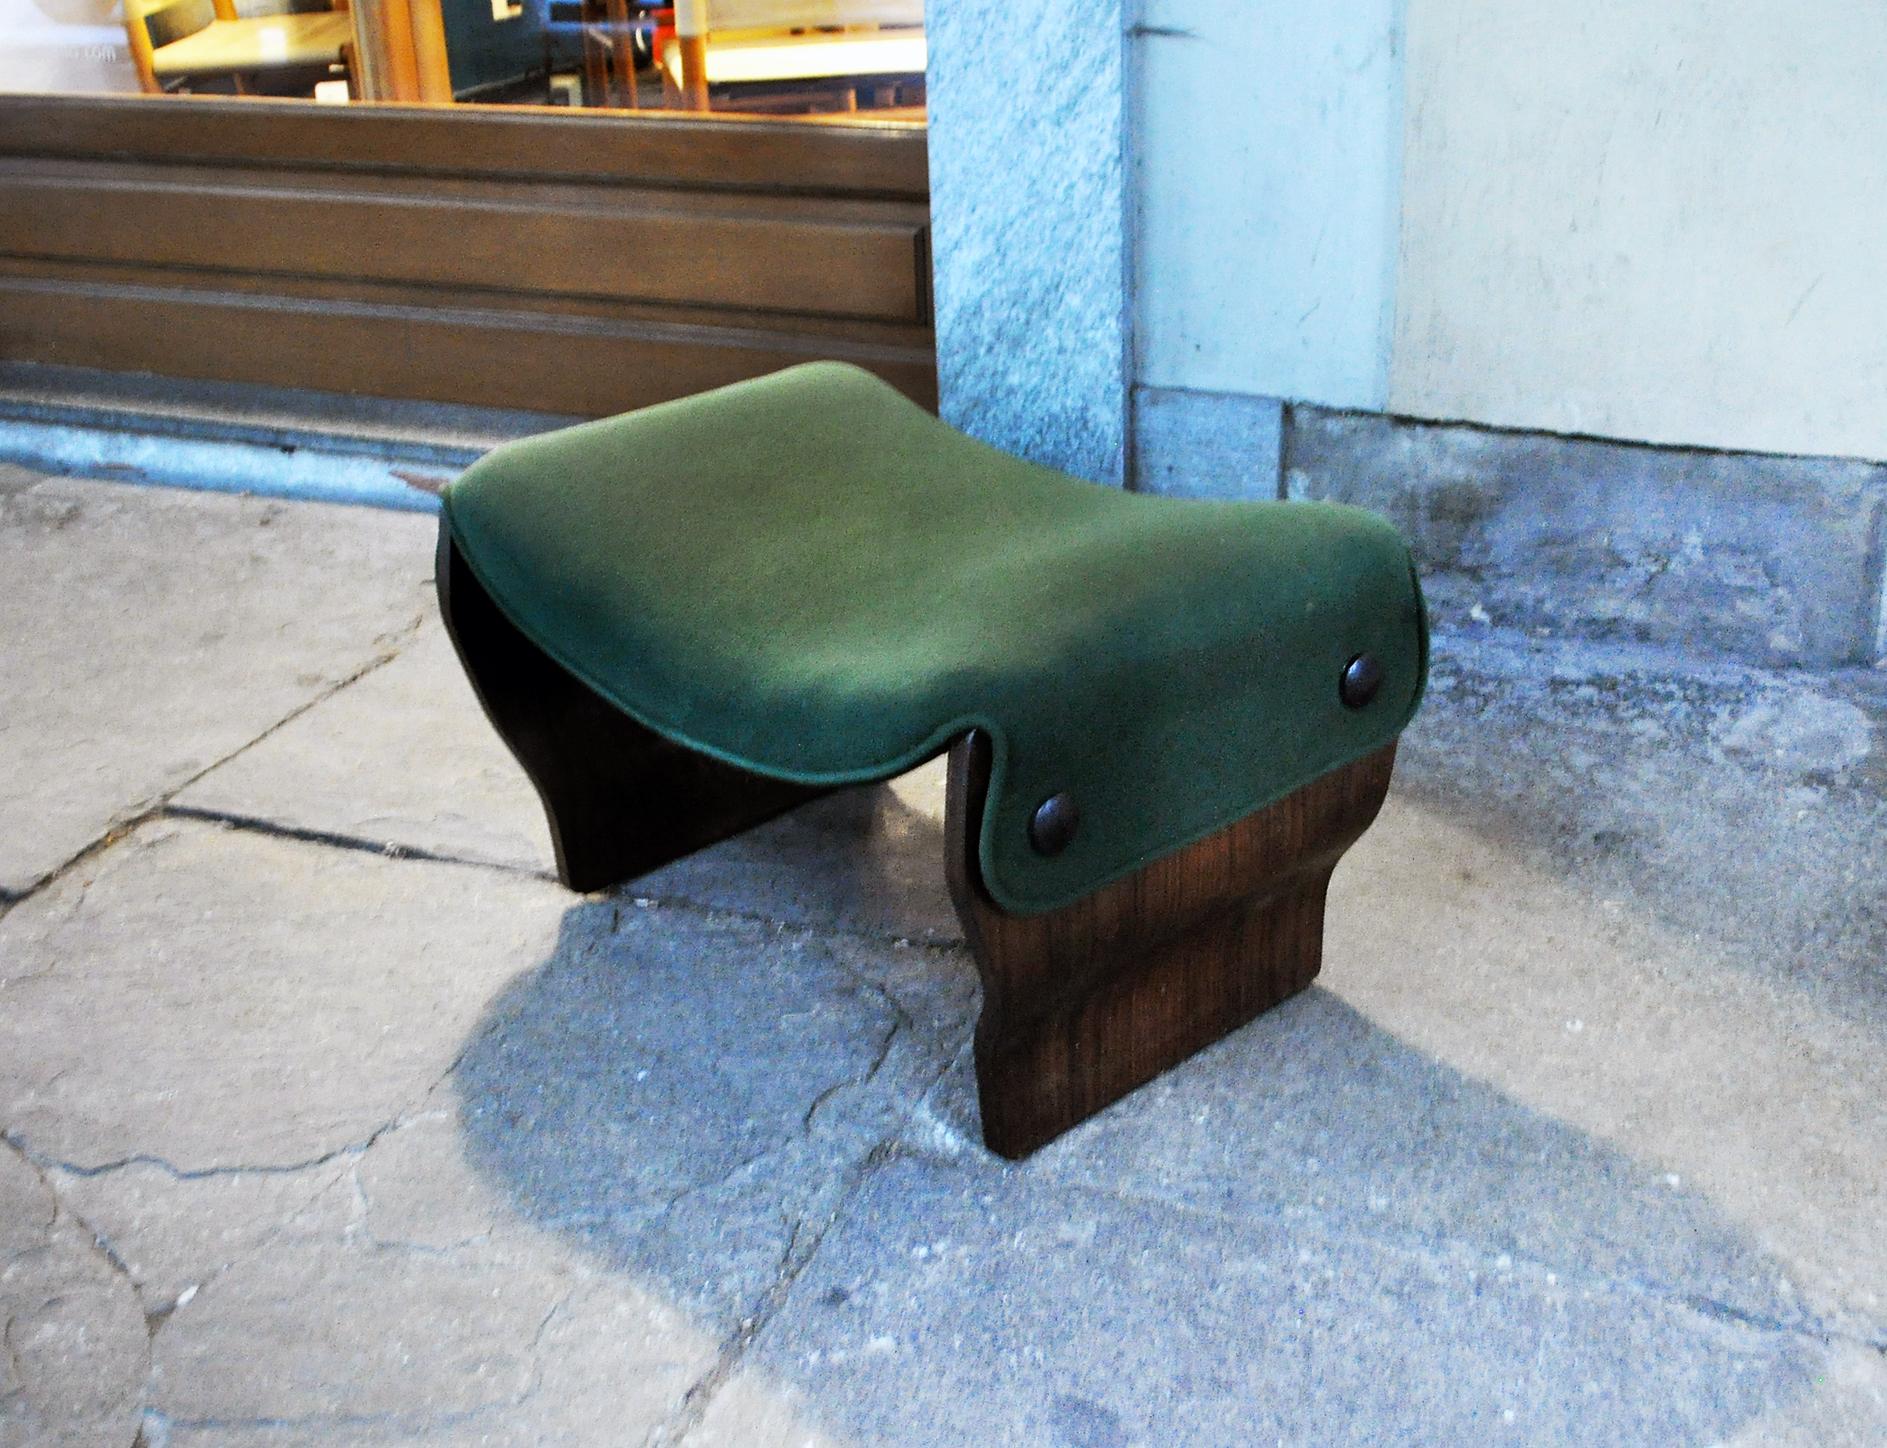 Pouf with wooden frame and fabric seat.
Model Canada
Designer Osvaldo Borsani
Manufacturer Tecno
1960s.